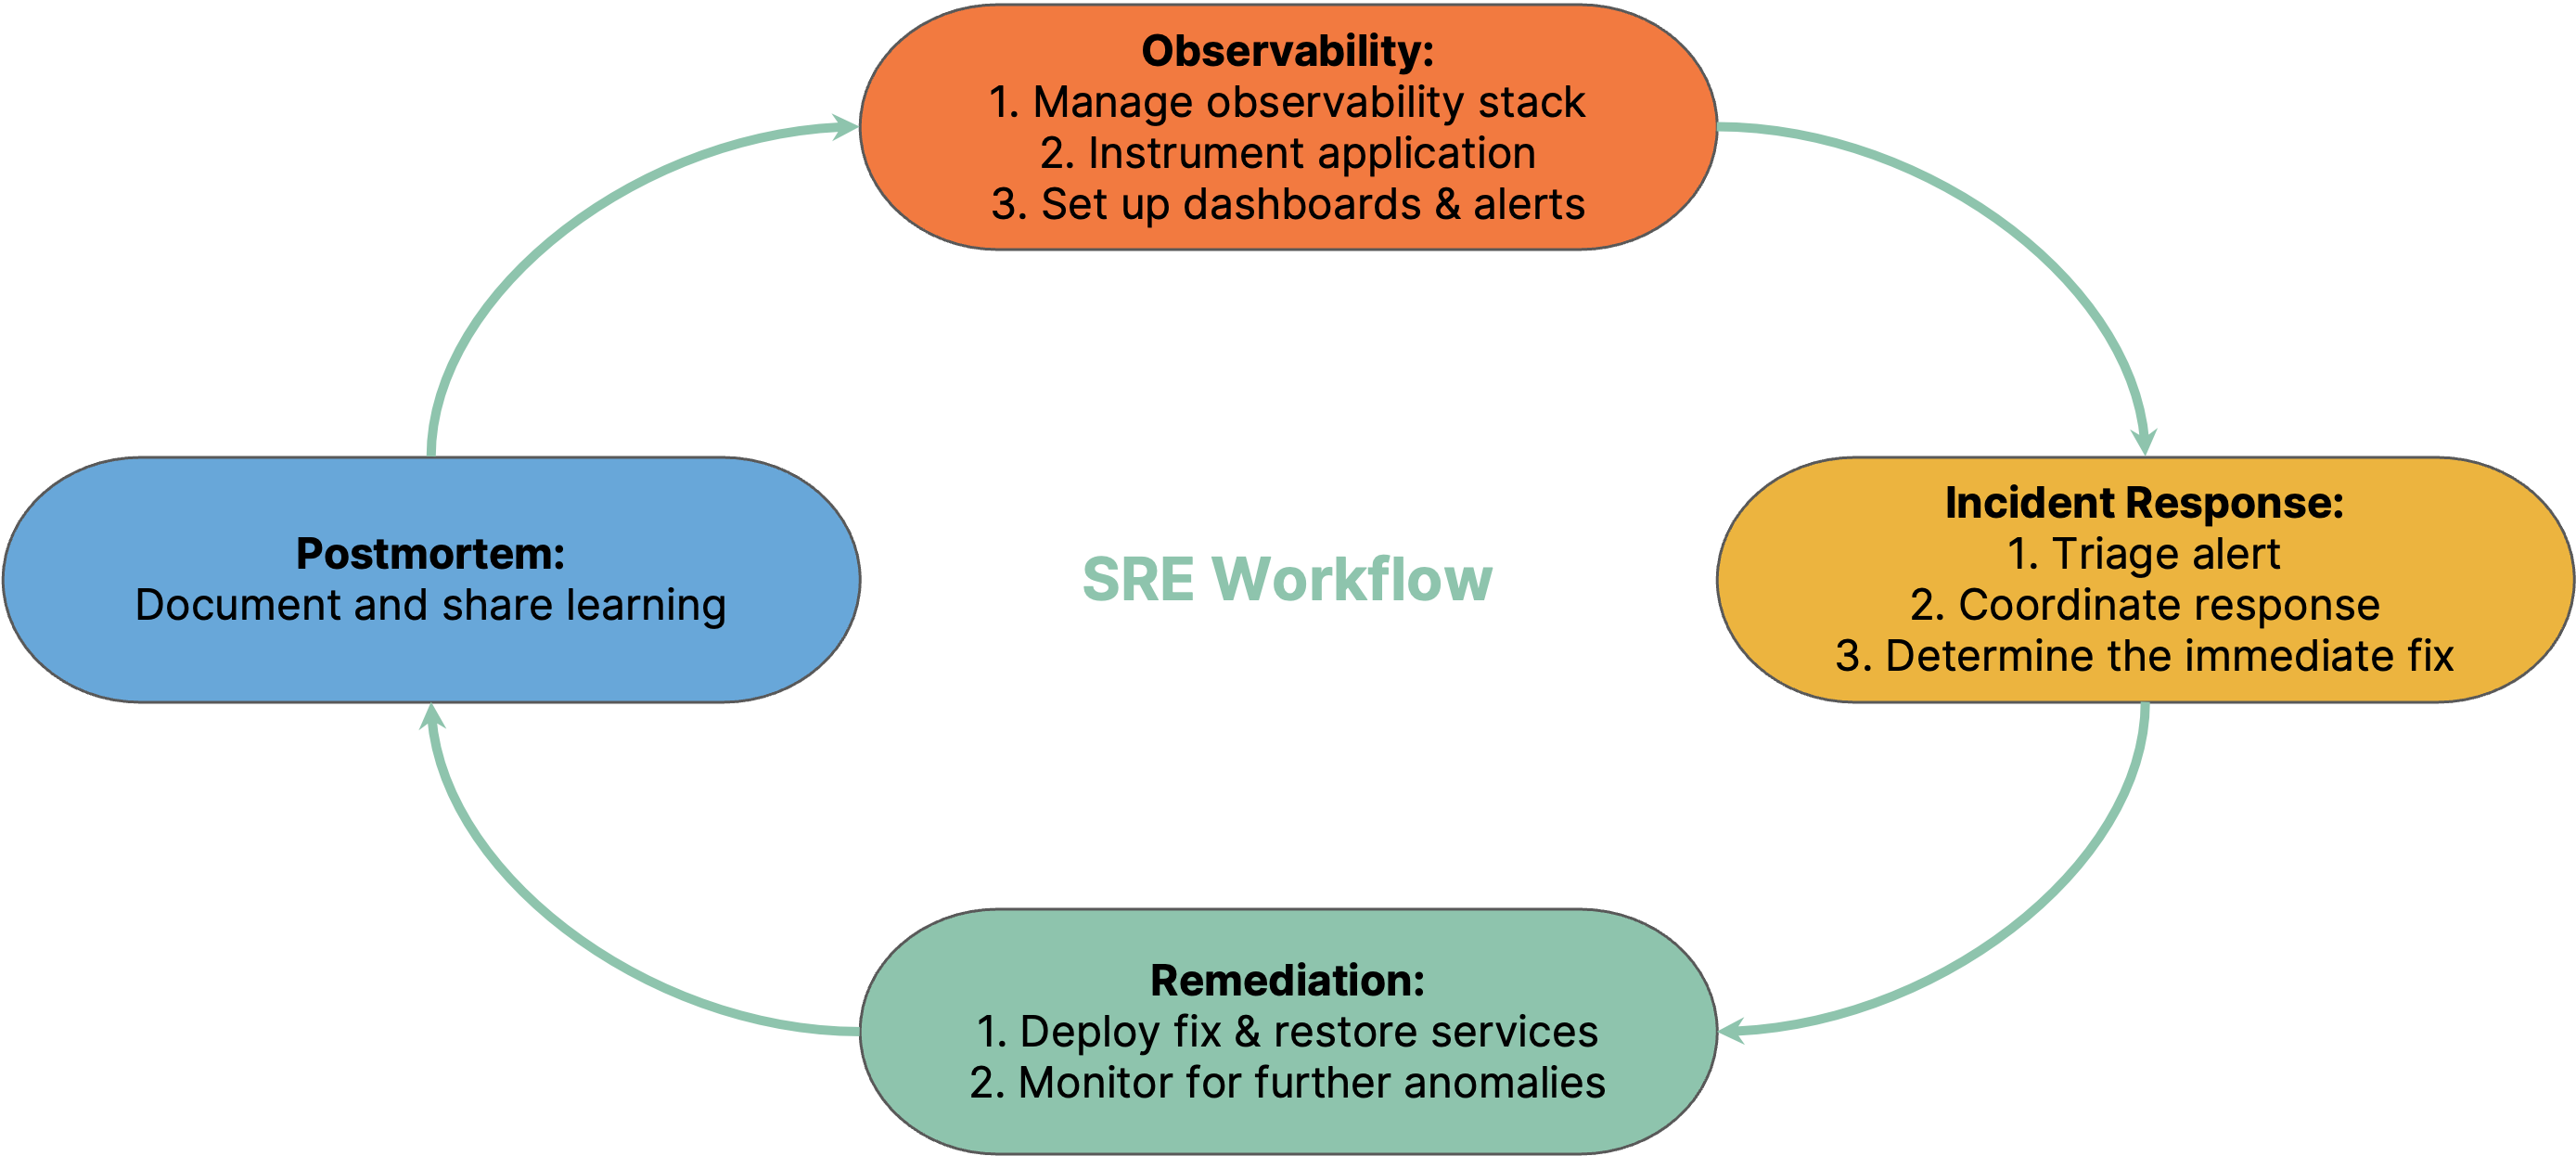 SRE Workflow